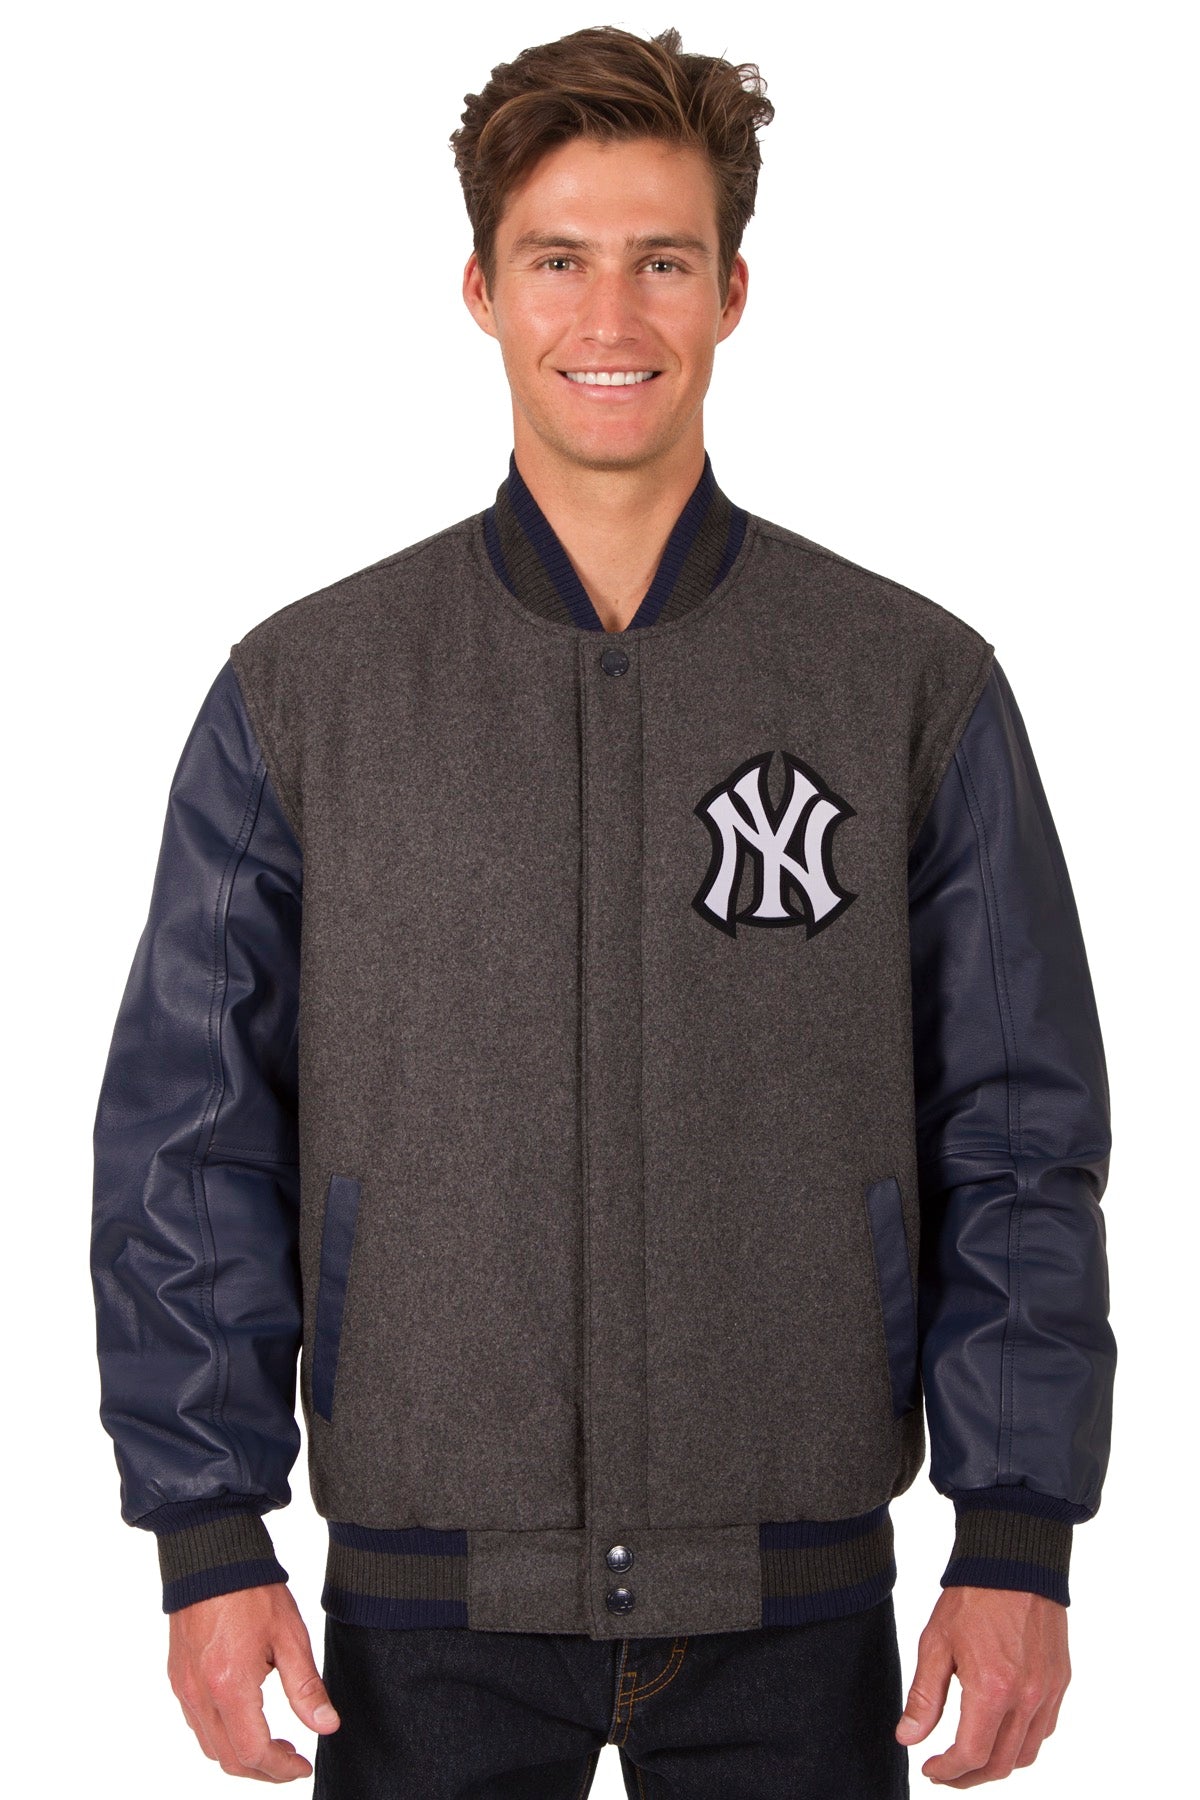 jh design yankees jacket